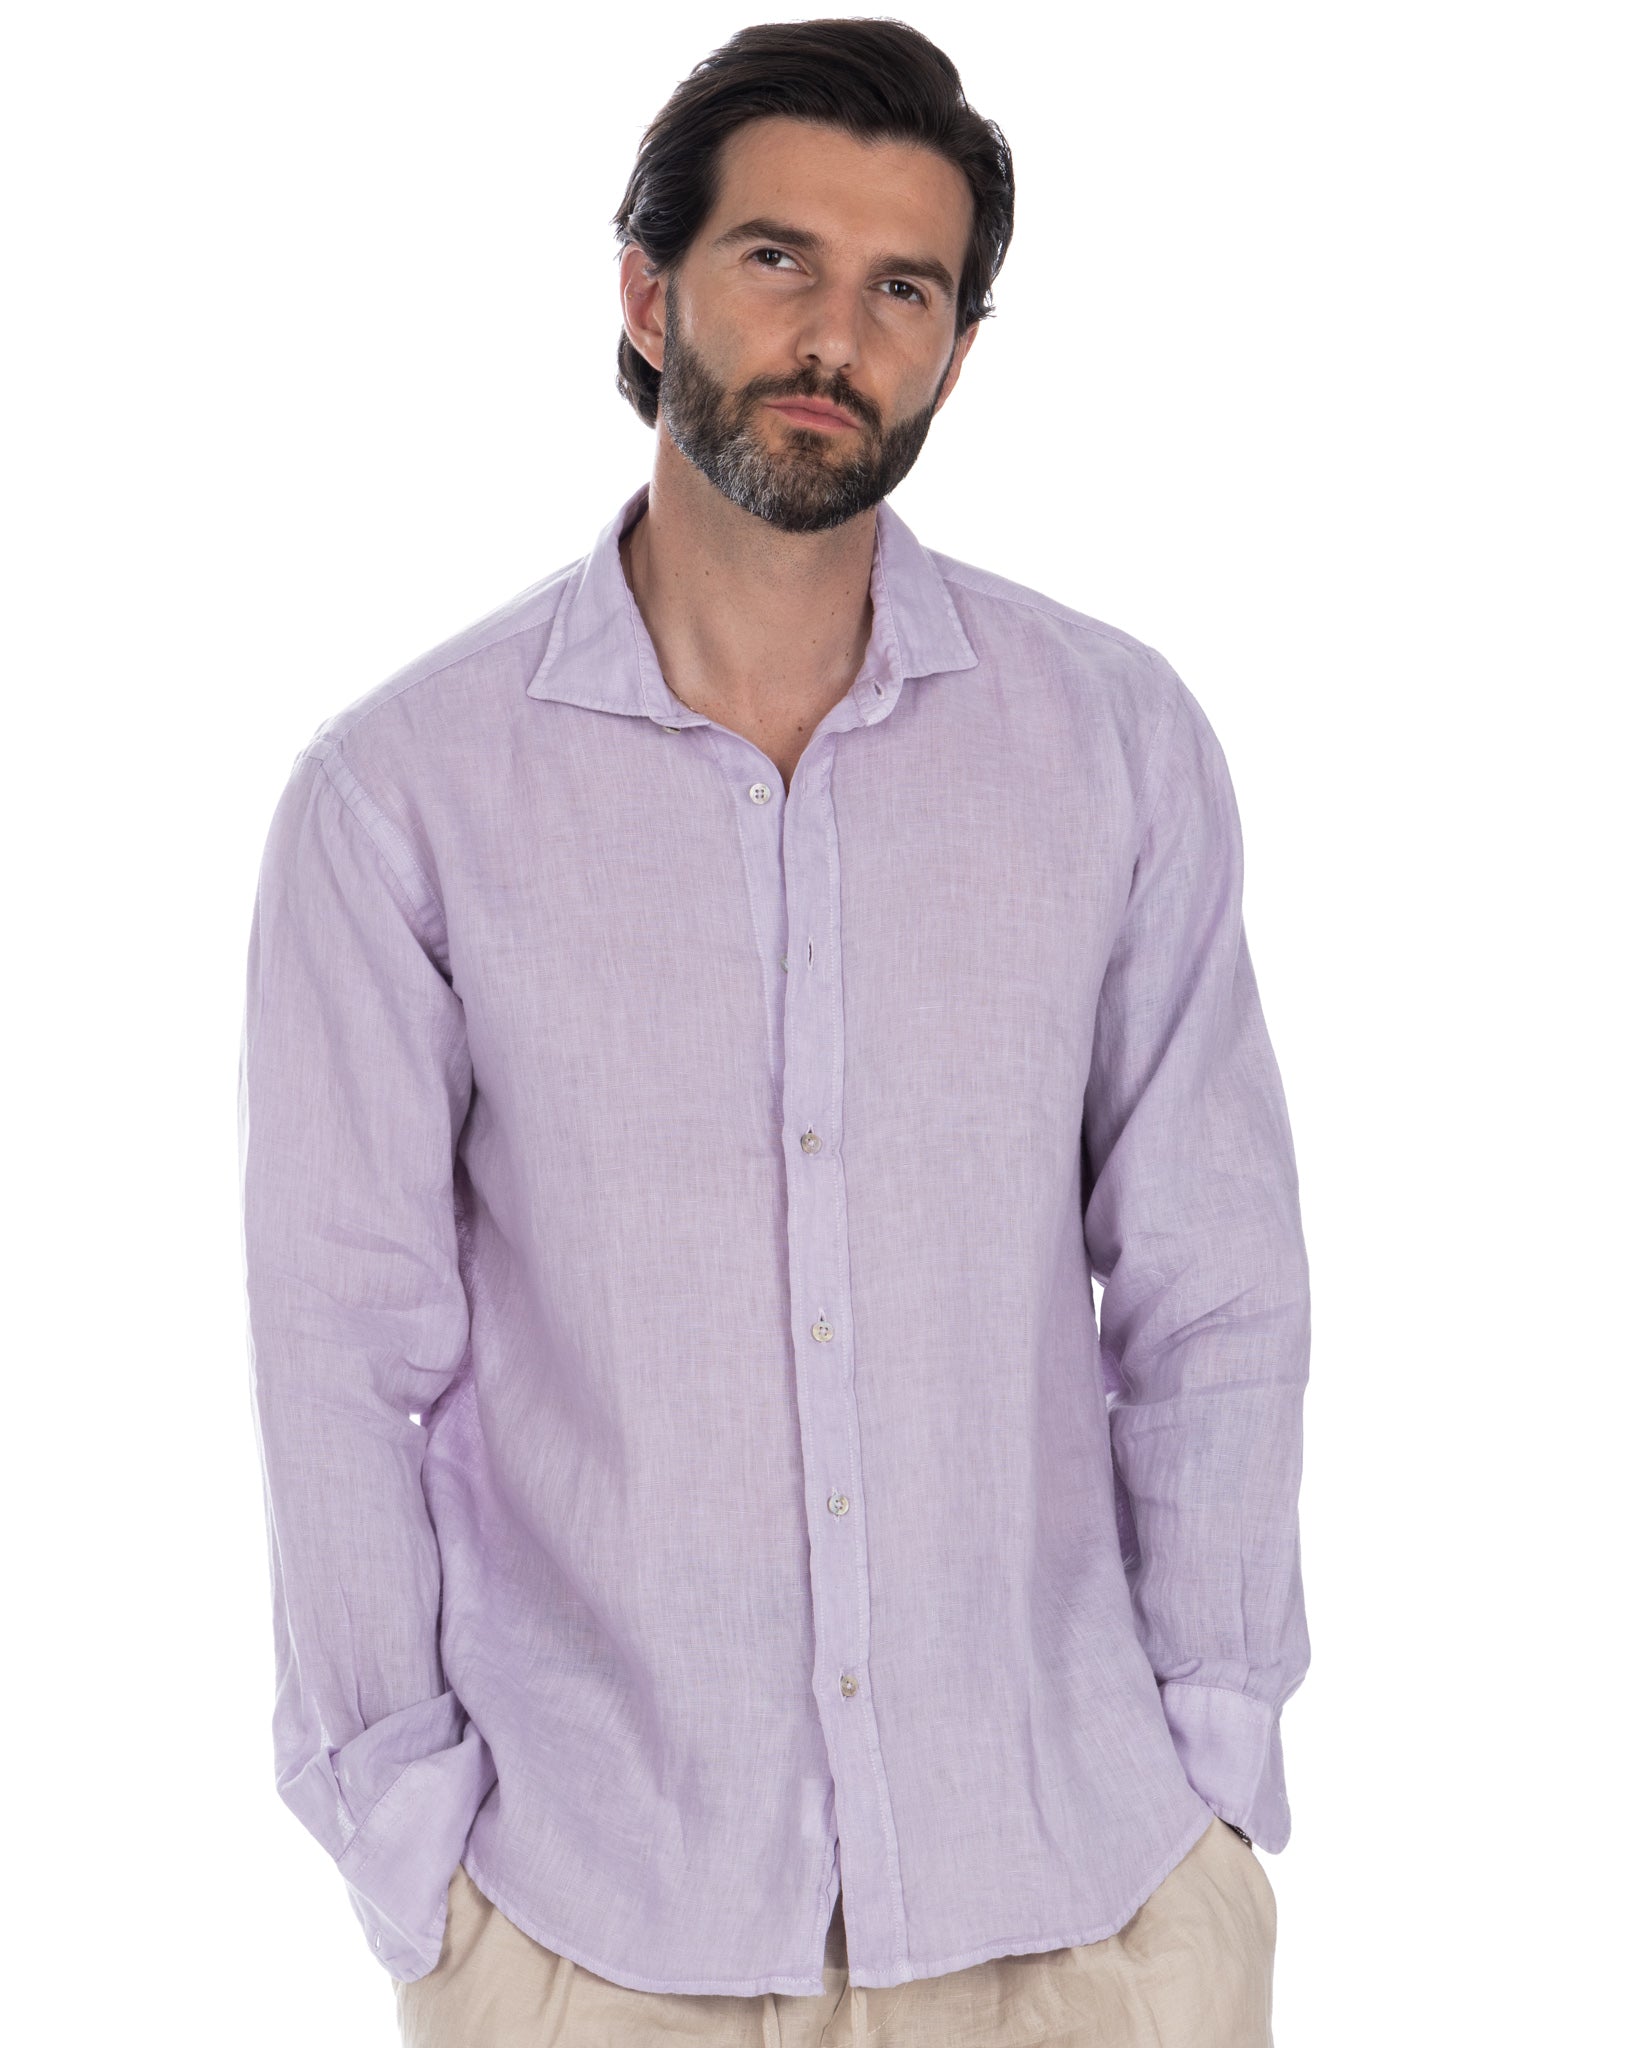 Montecarlo - chemise pur lin lilas